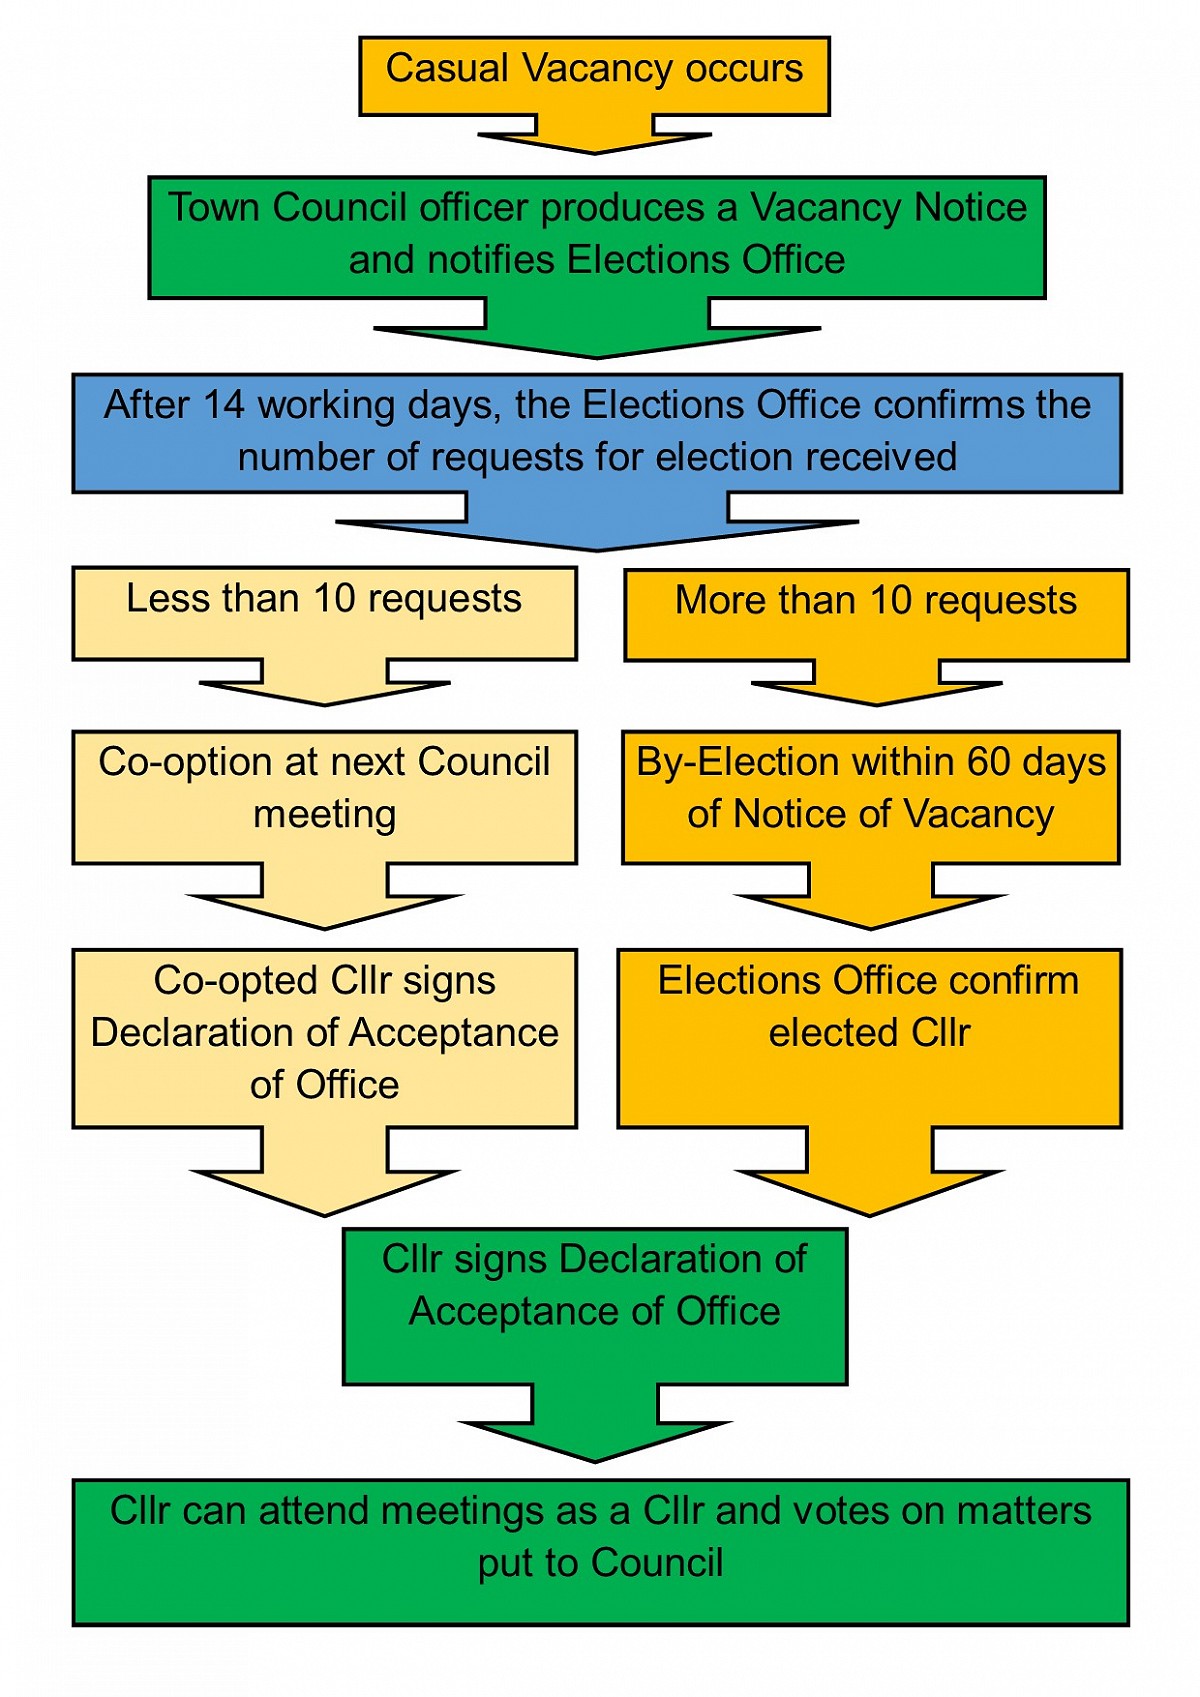 Flow chart describing casual vacancy process